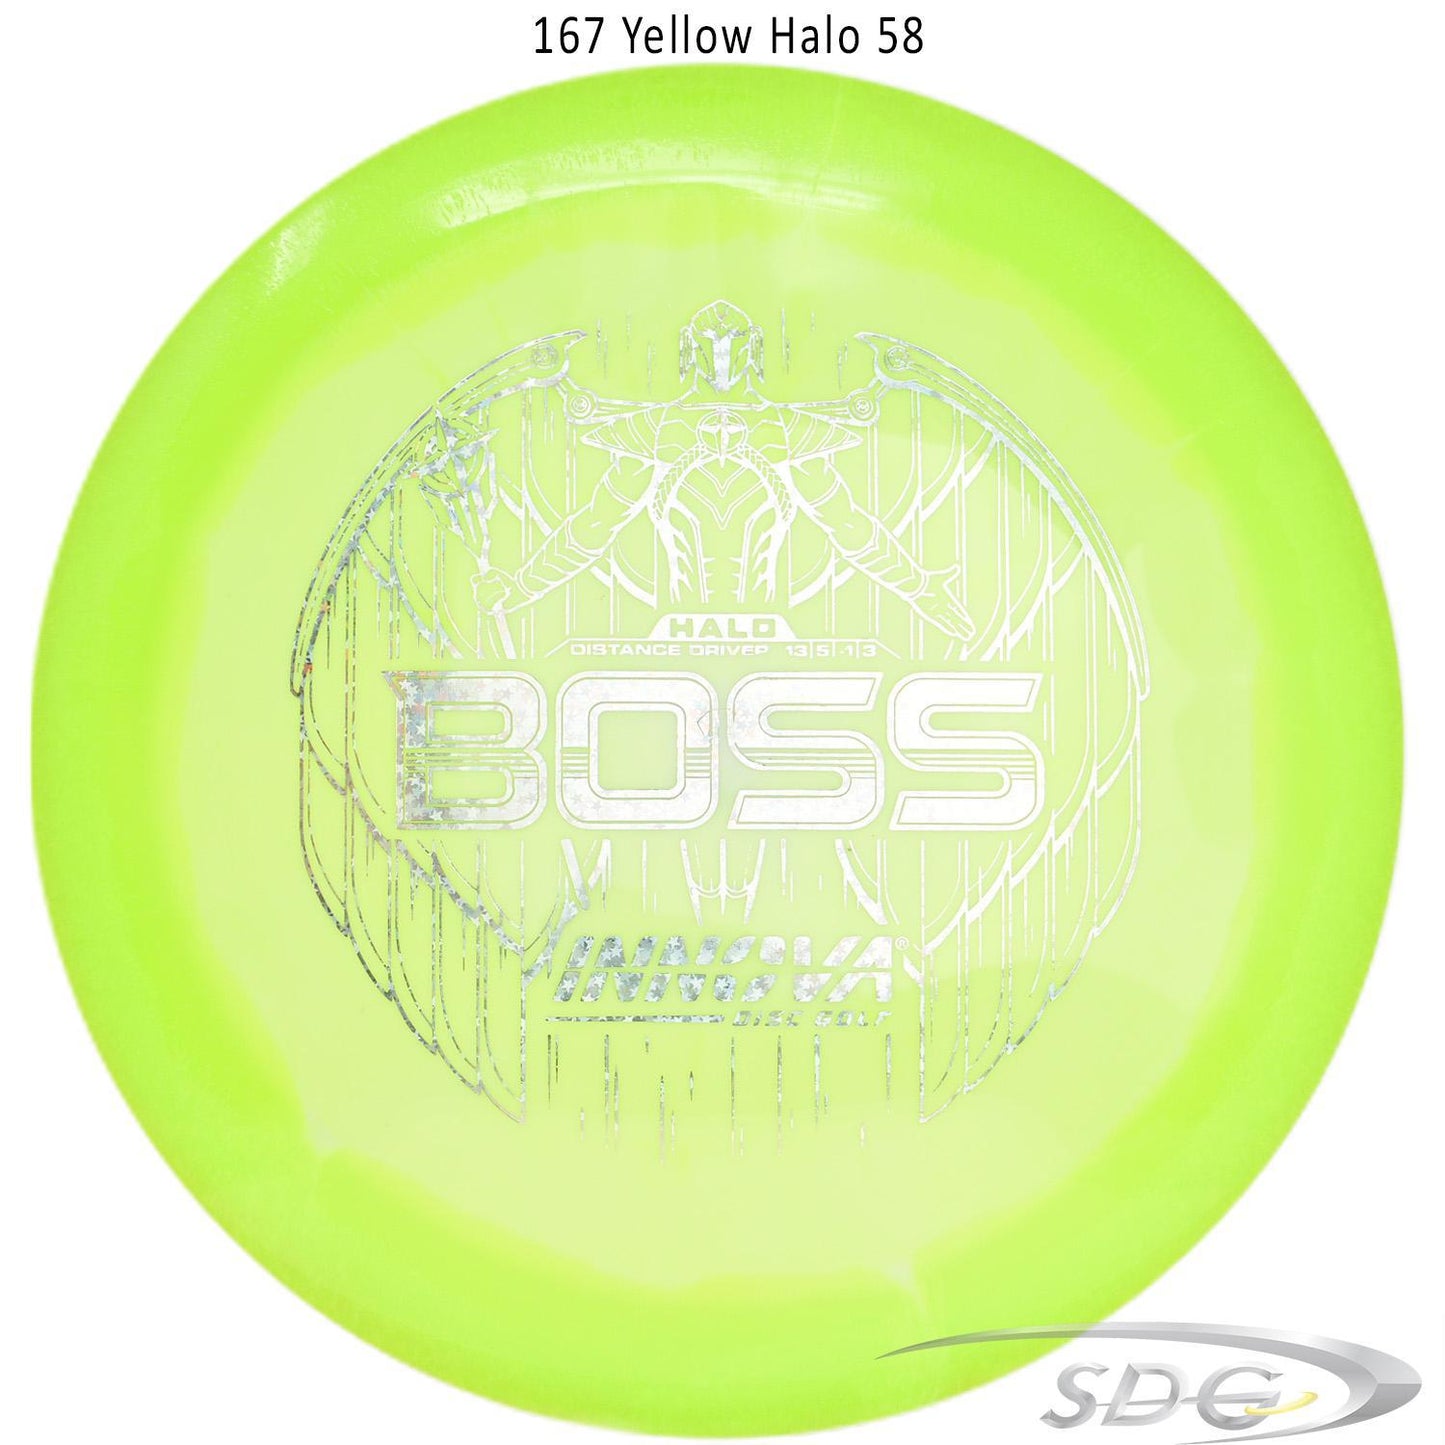 innova-halo-star-boss-disc-golf-distance-driver 167 Yellow Halo 58 